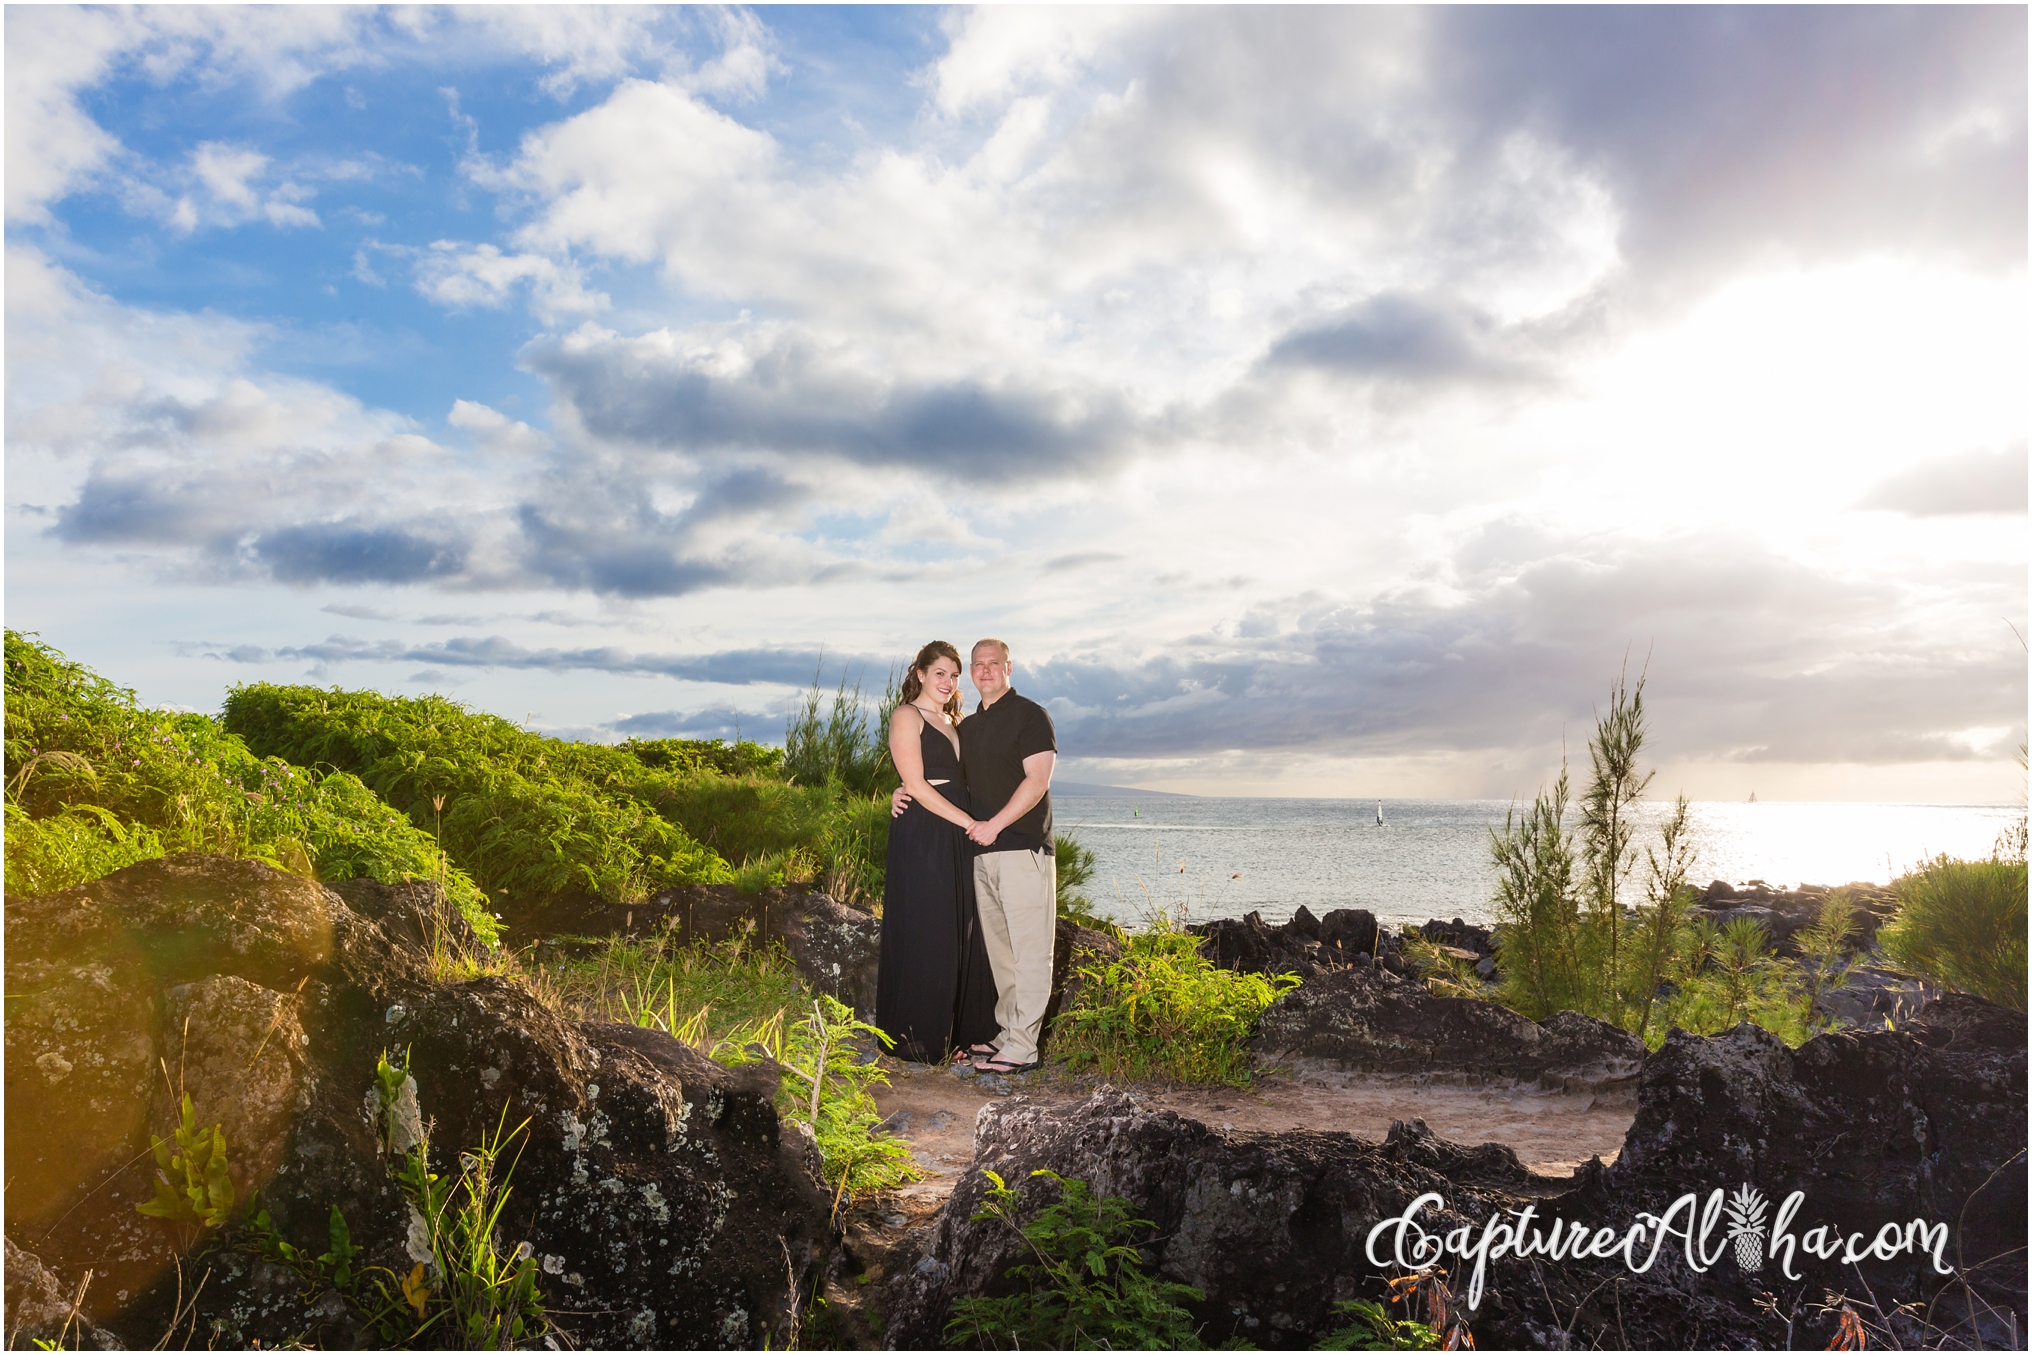 Maui honeymoon photography at Kapalua Bay